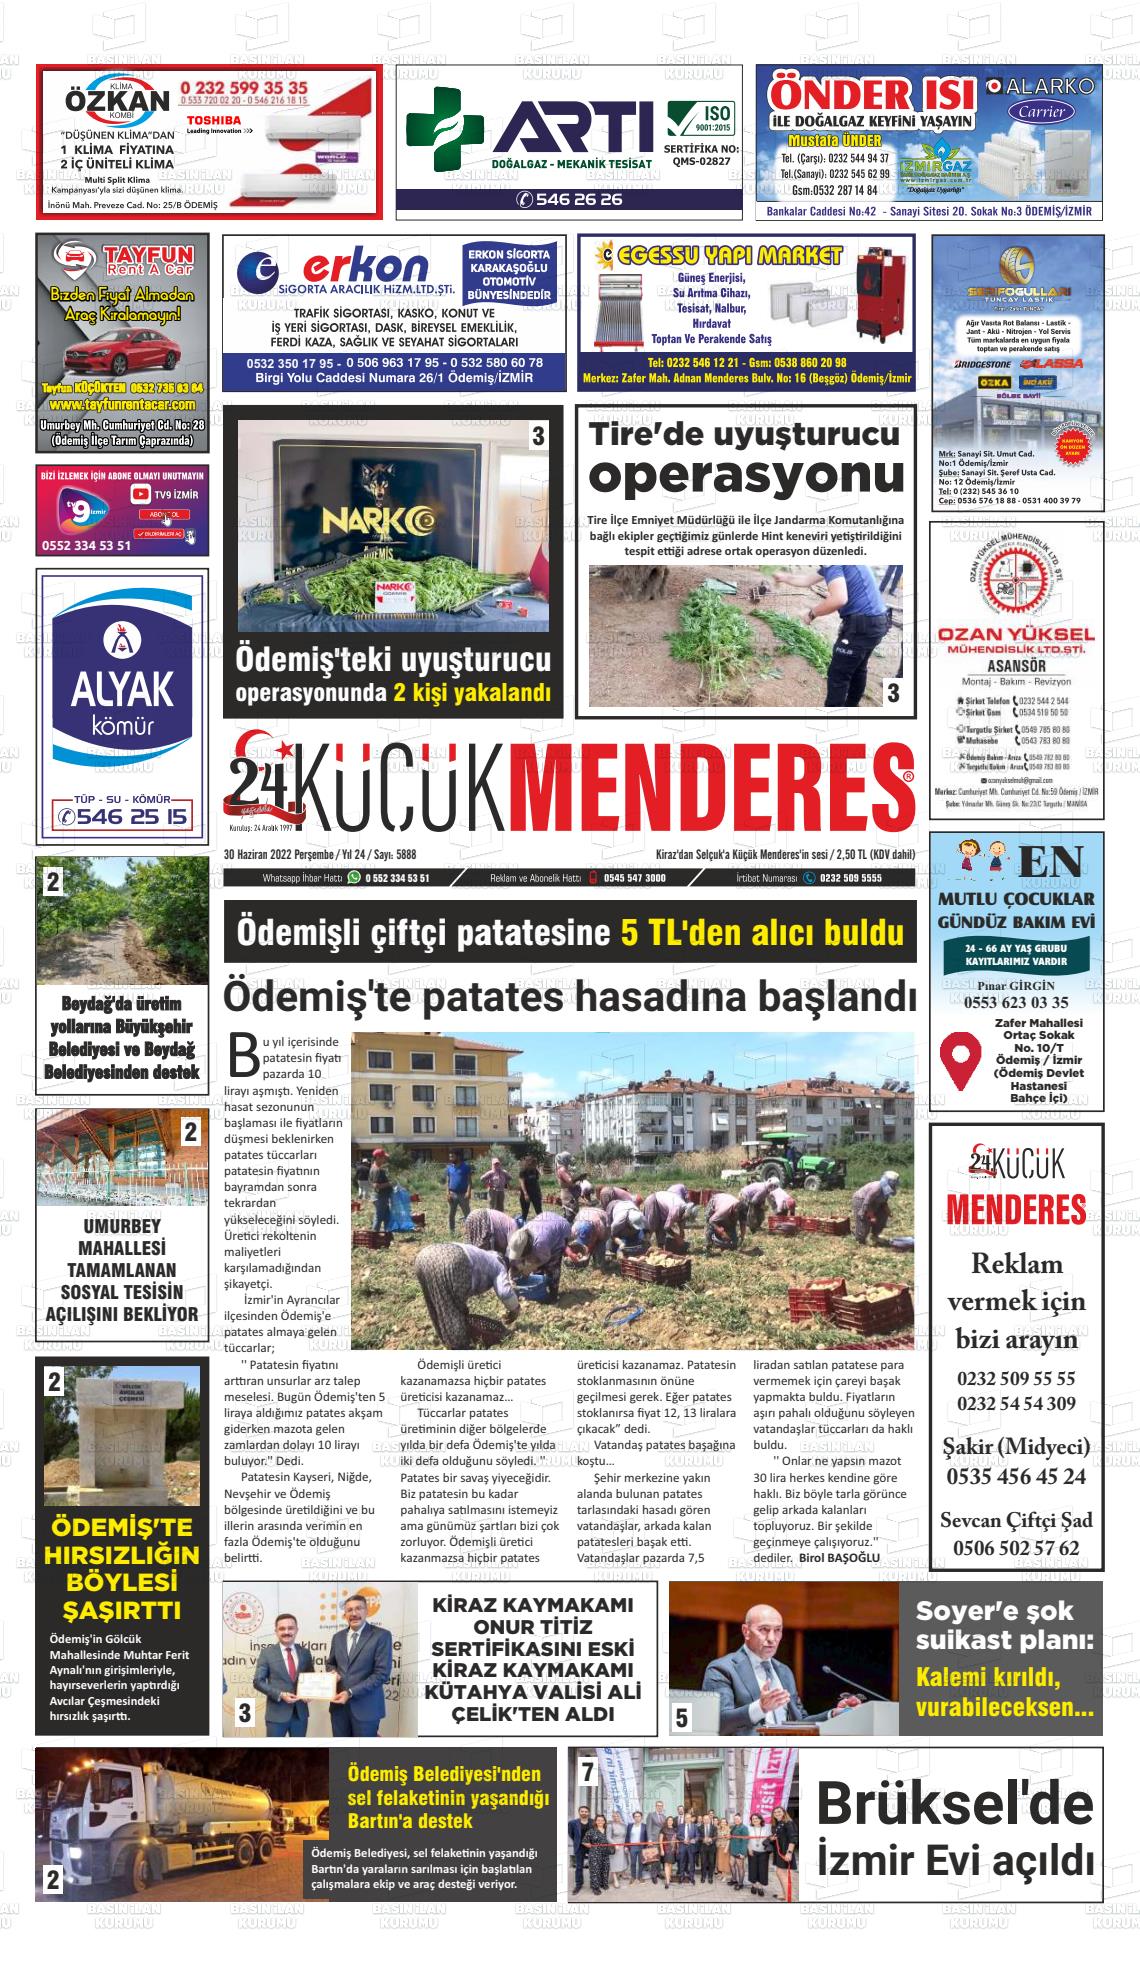 30 Haziran 2022 Küçük Menderes Gazete Manşeti